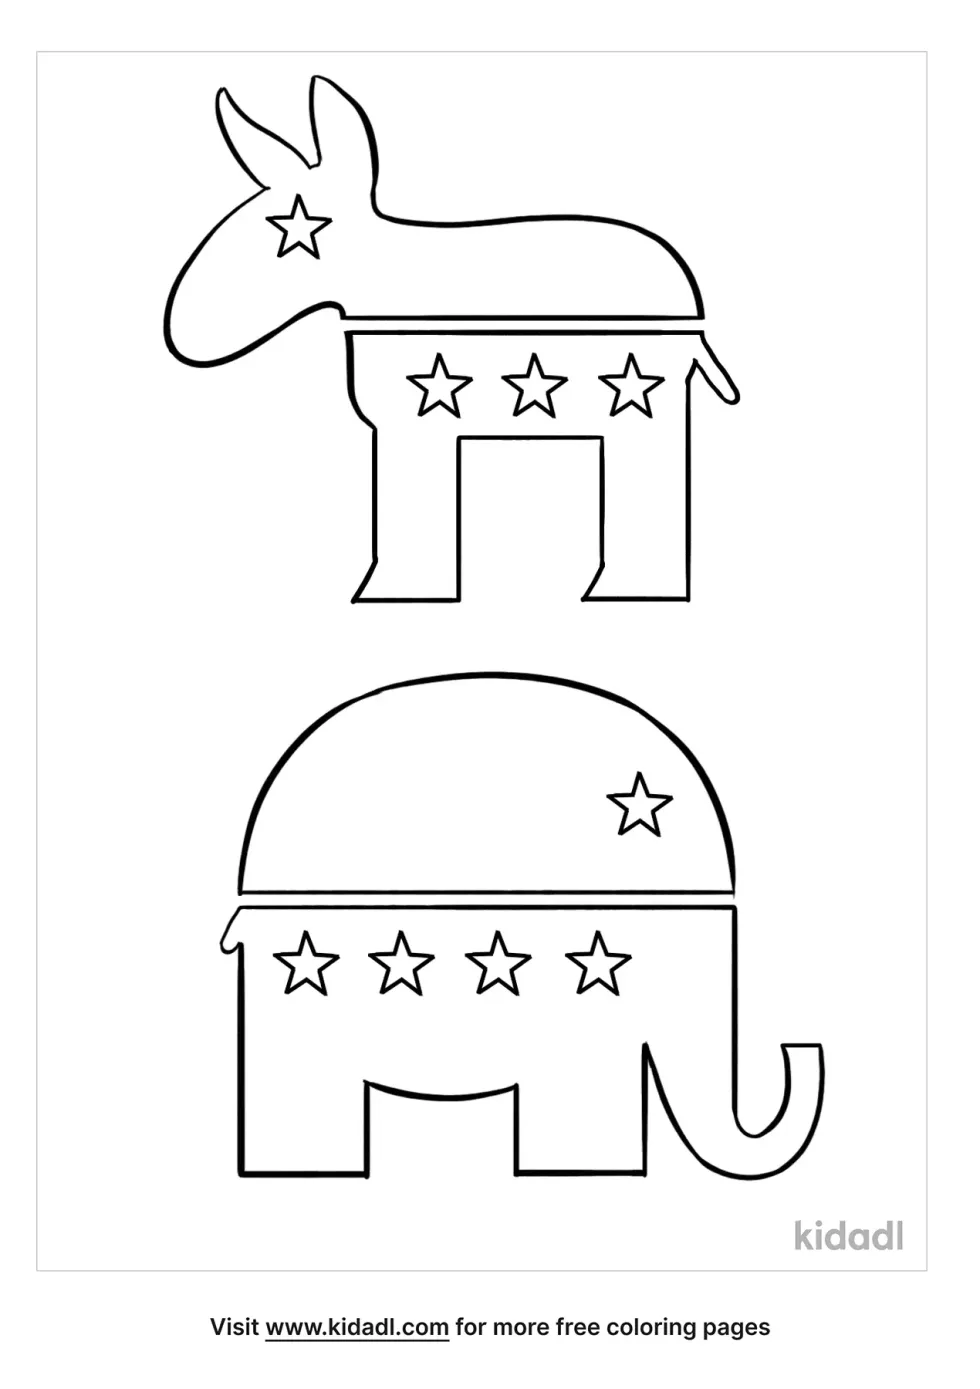 Political Party Symbols